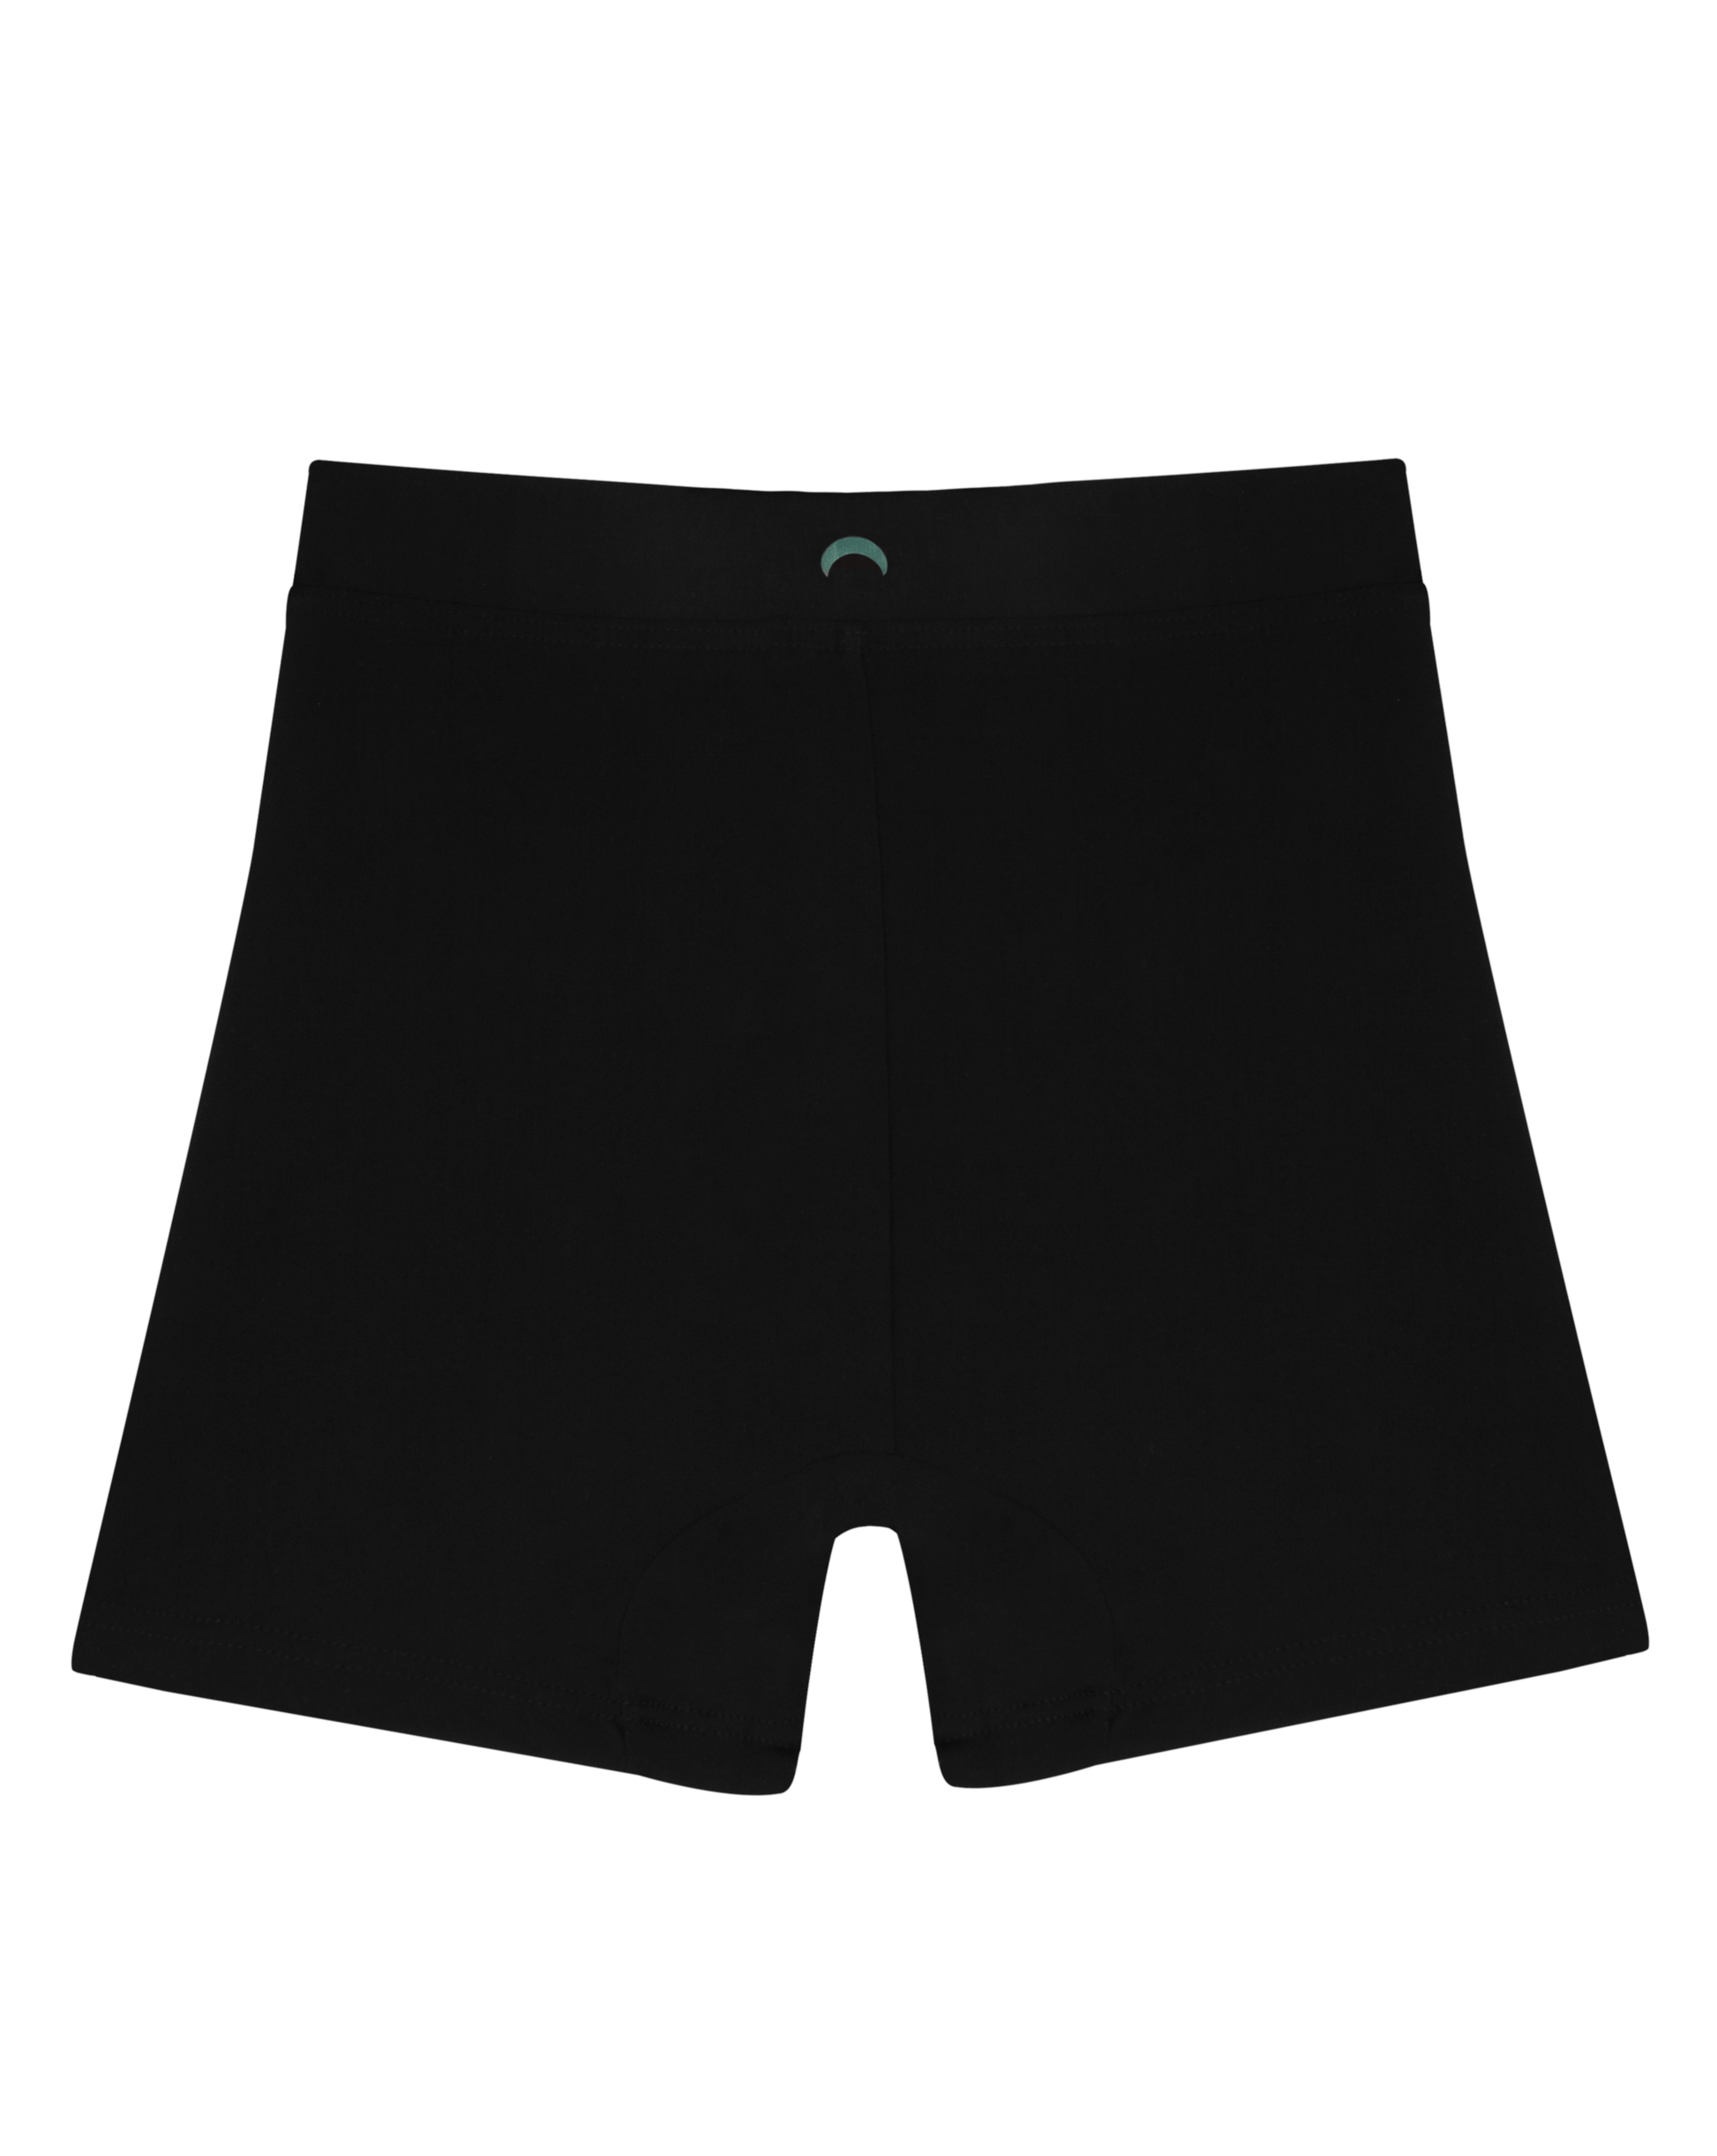 Mid Boxer – huha underwear